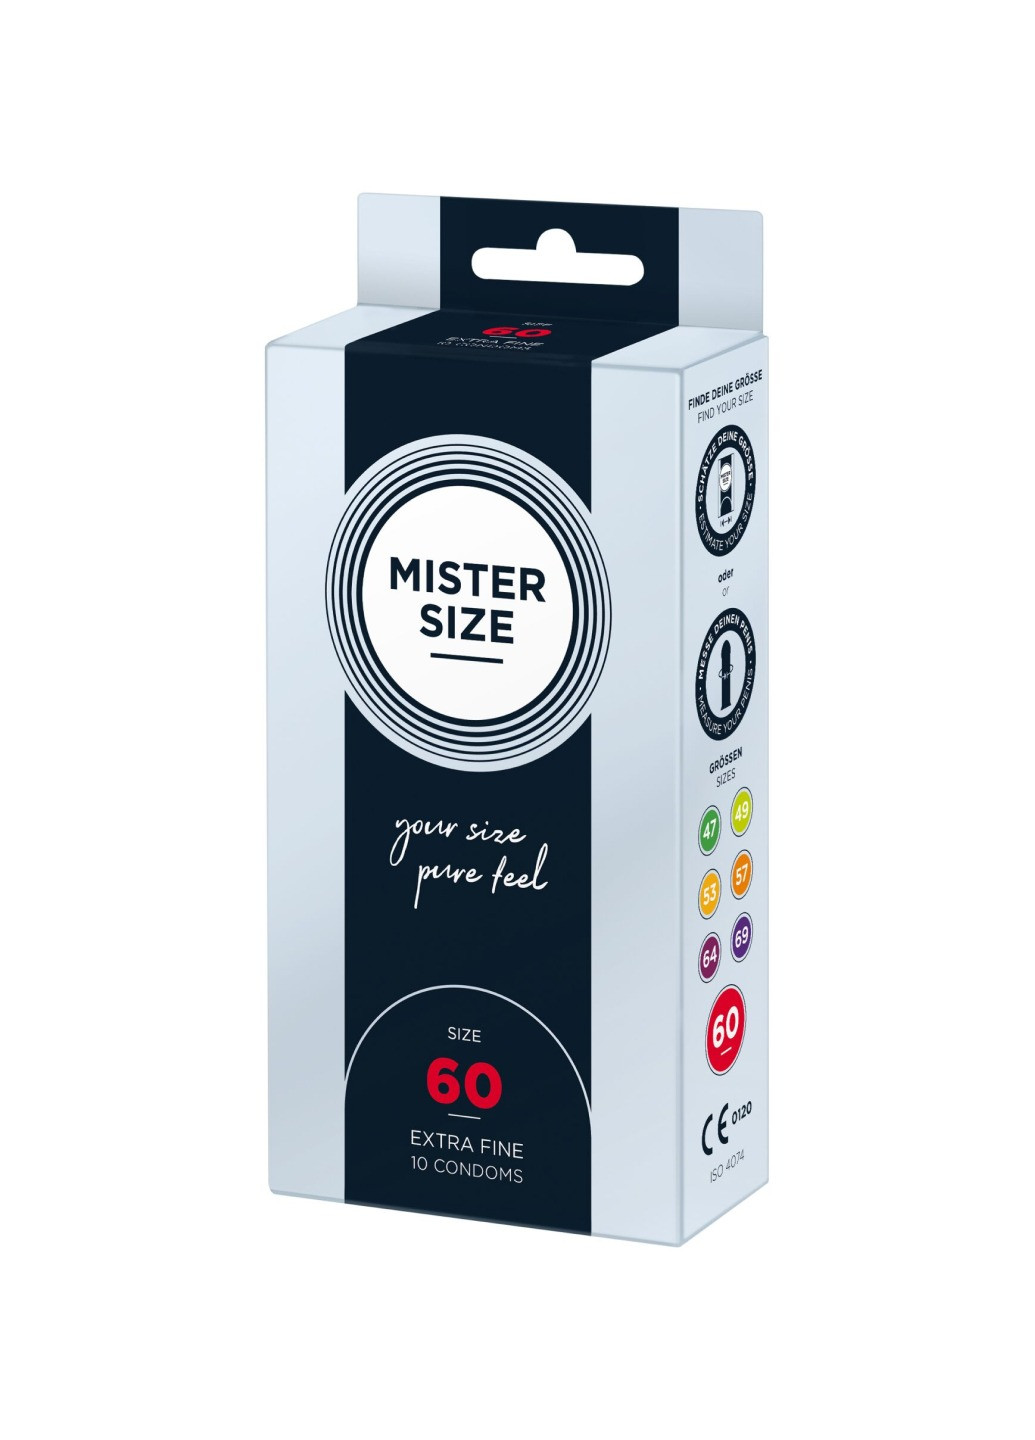 Презервативы Mister Size - pure feel - 60 (10 condoms), толщина 0,05 мм No Brand (276905764)